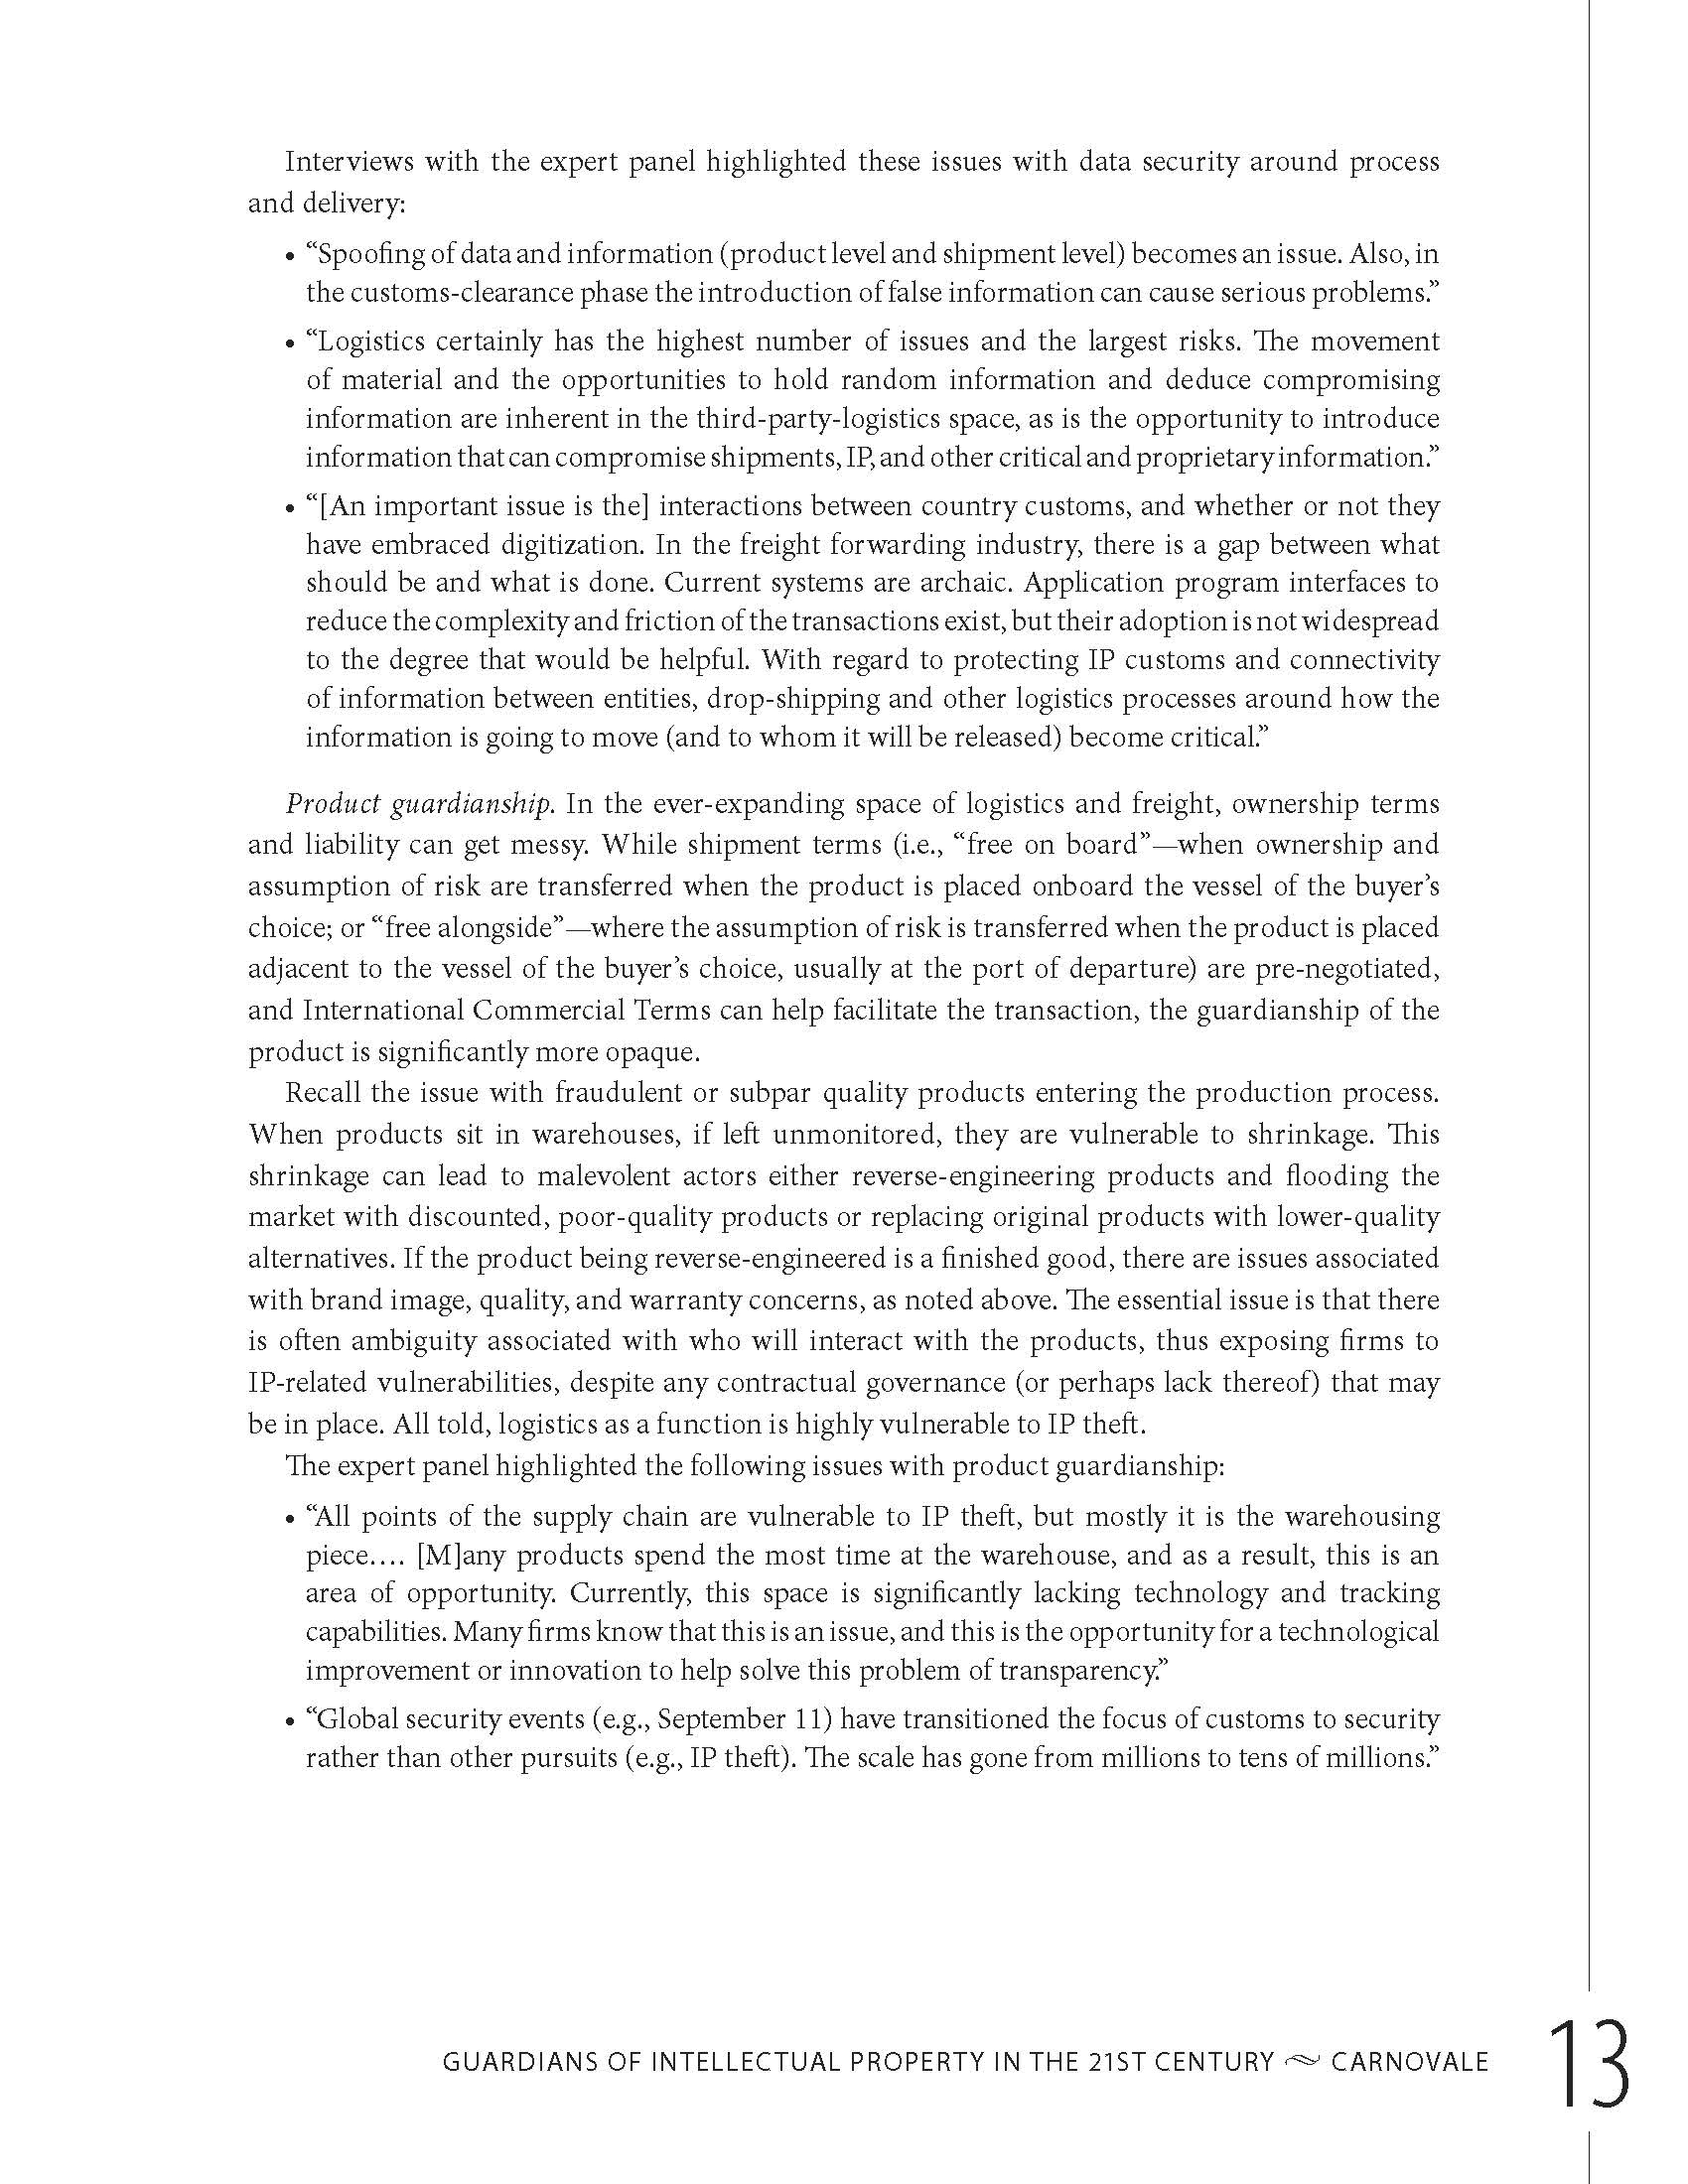 NBR21世纪知识产权的守护者-全球供应链行业英文版44页_页面_20.jpg